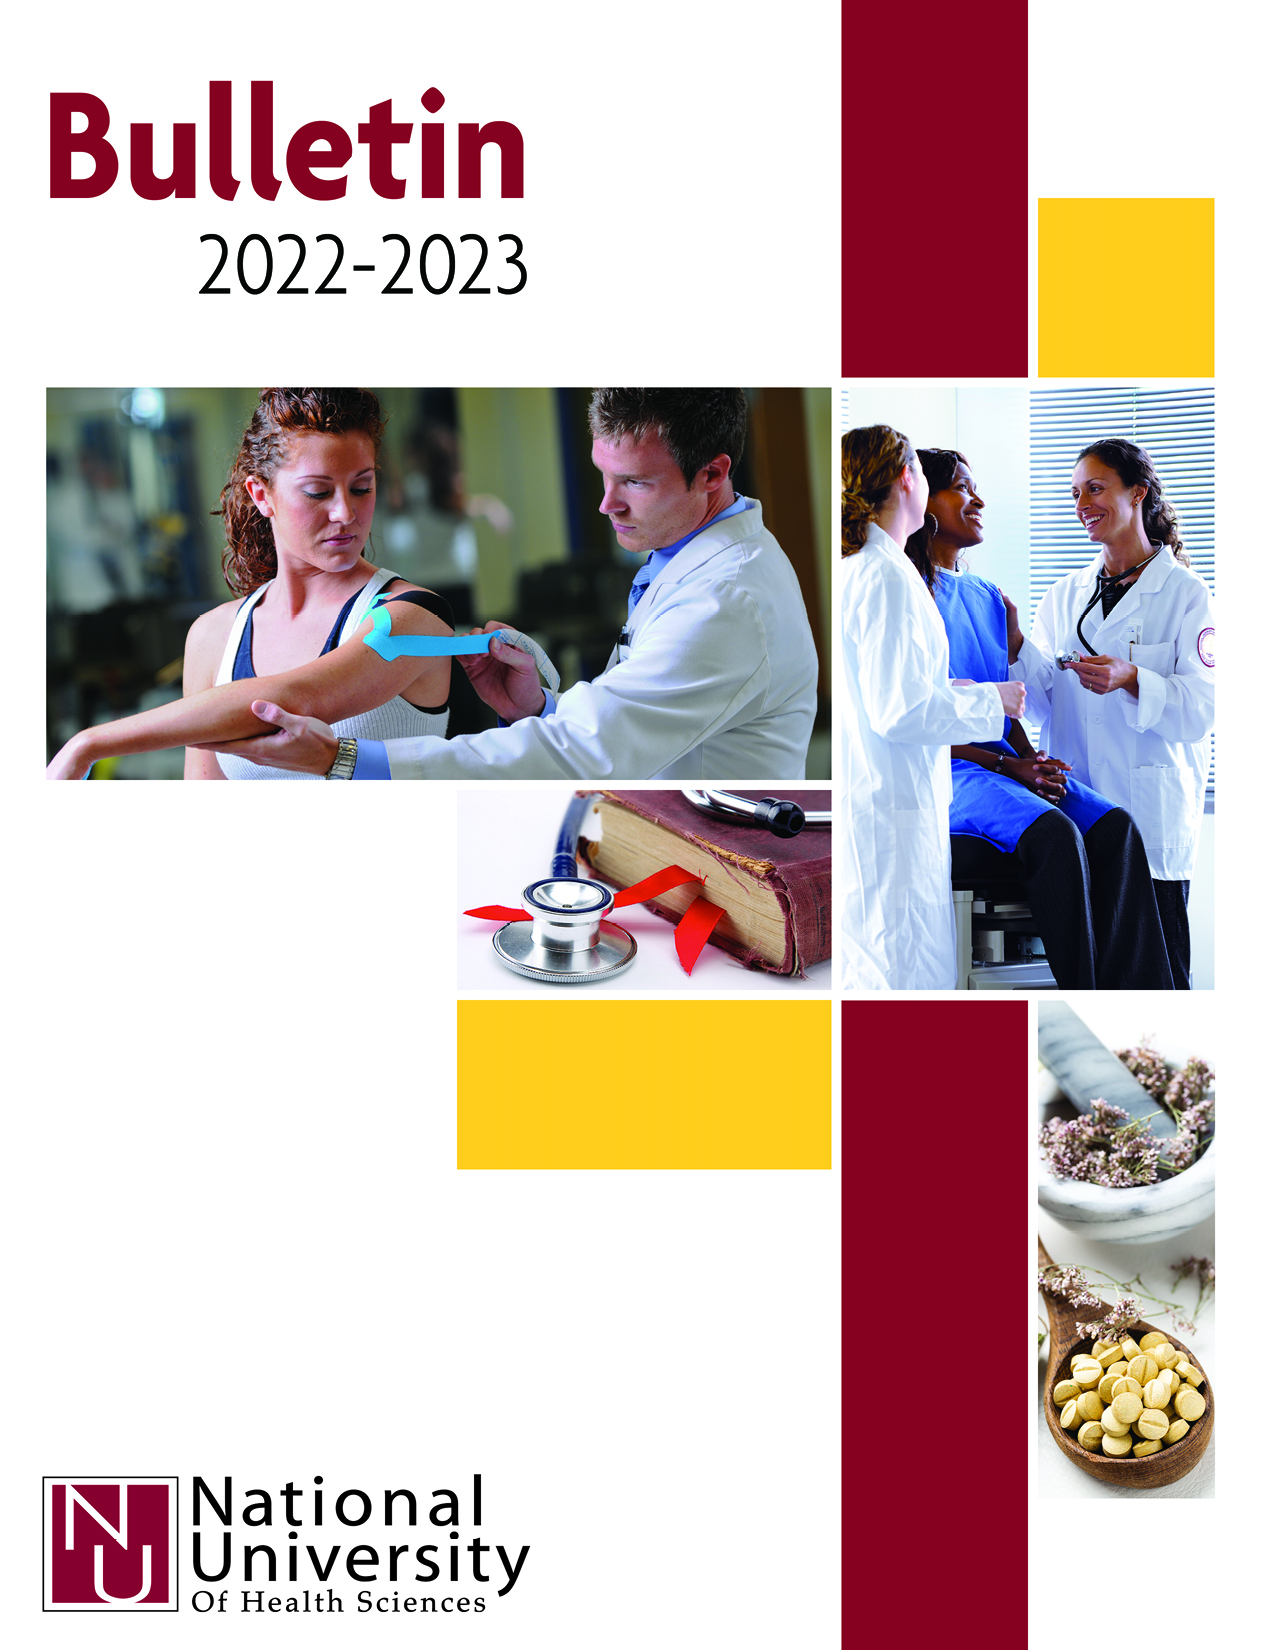 NUHS Bulletin 2022 cover